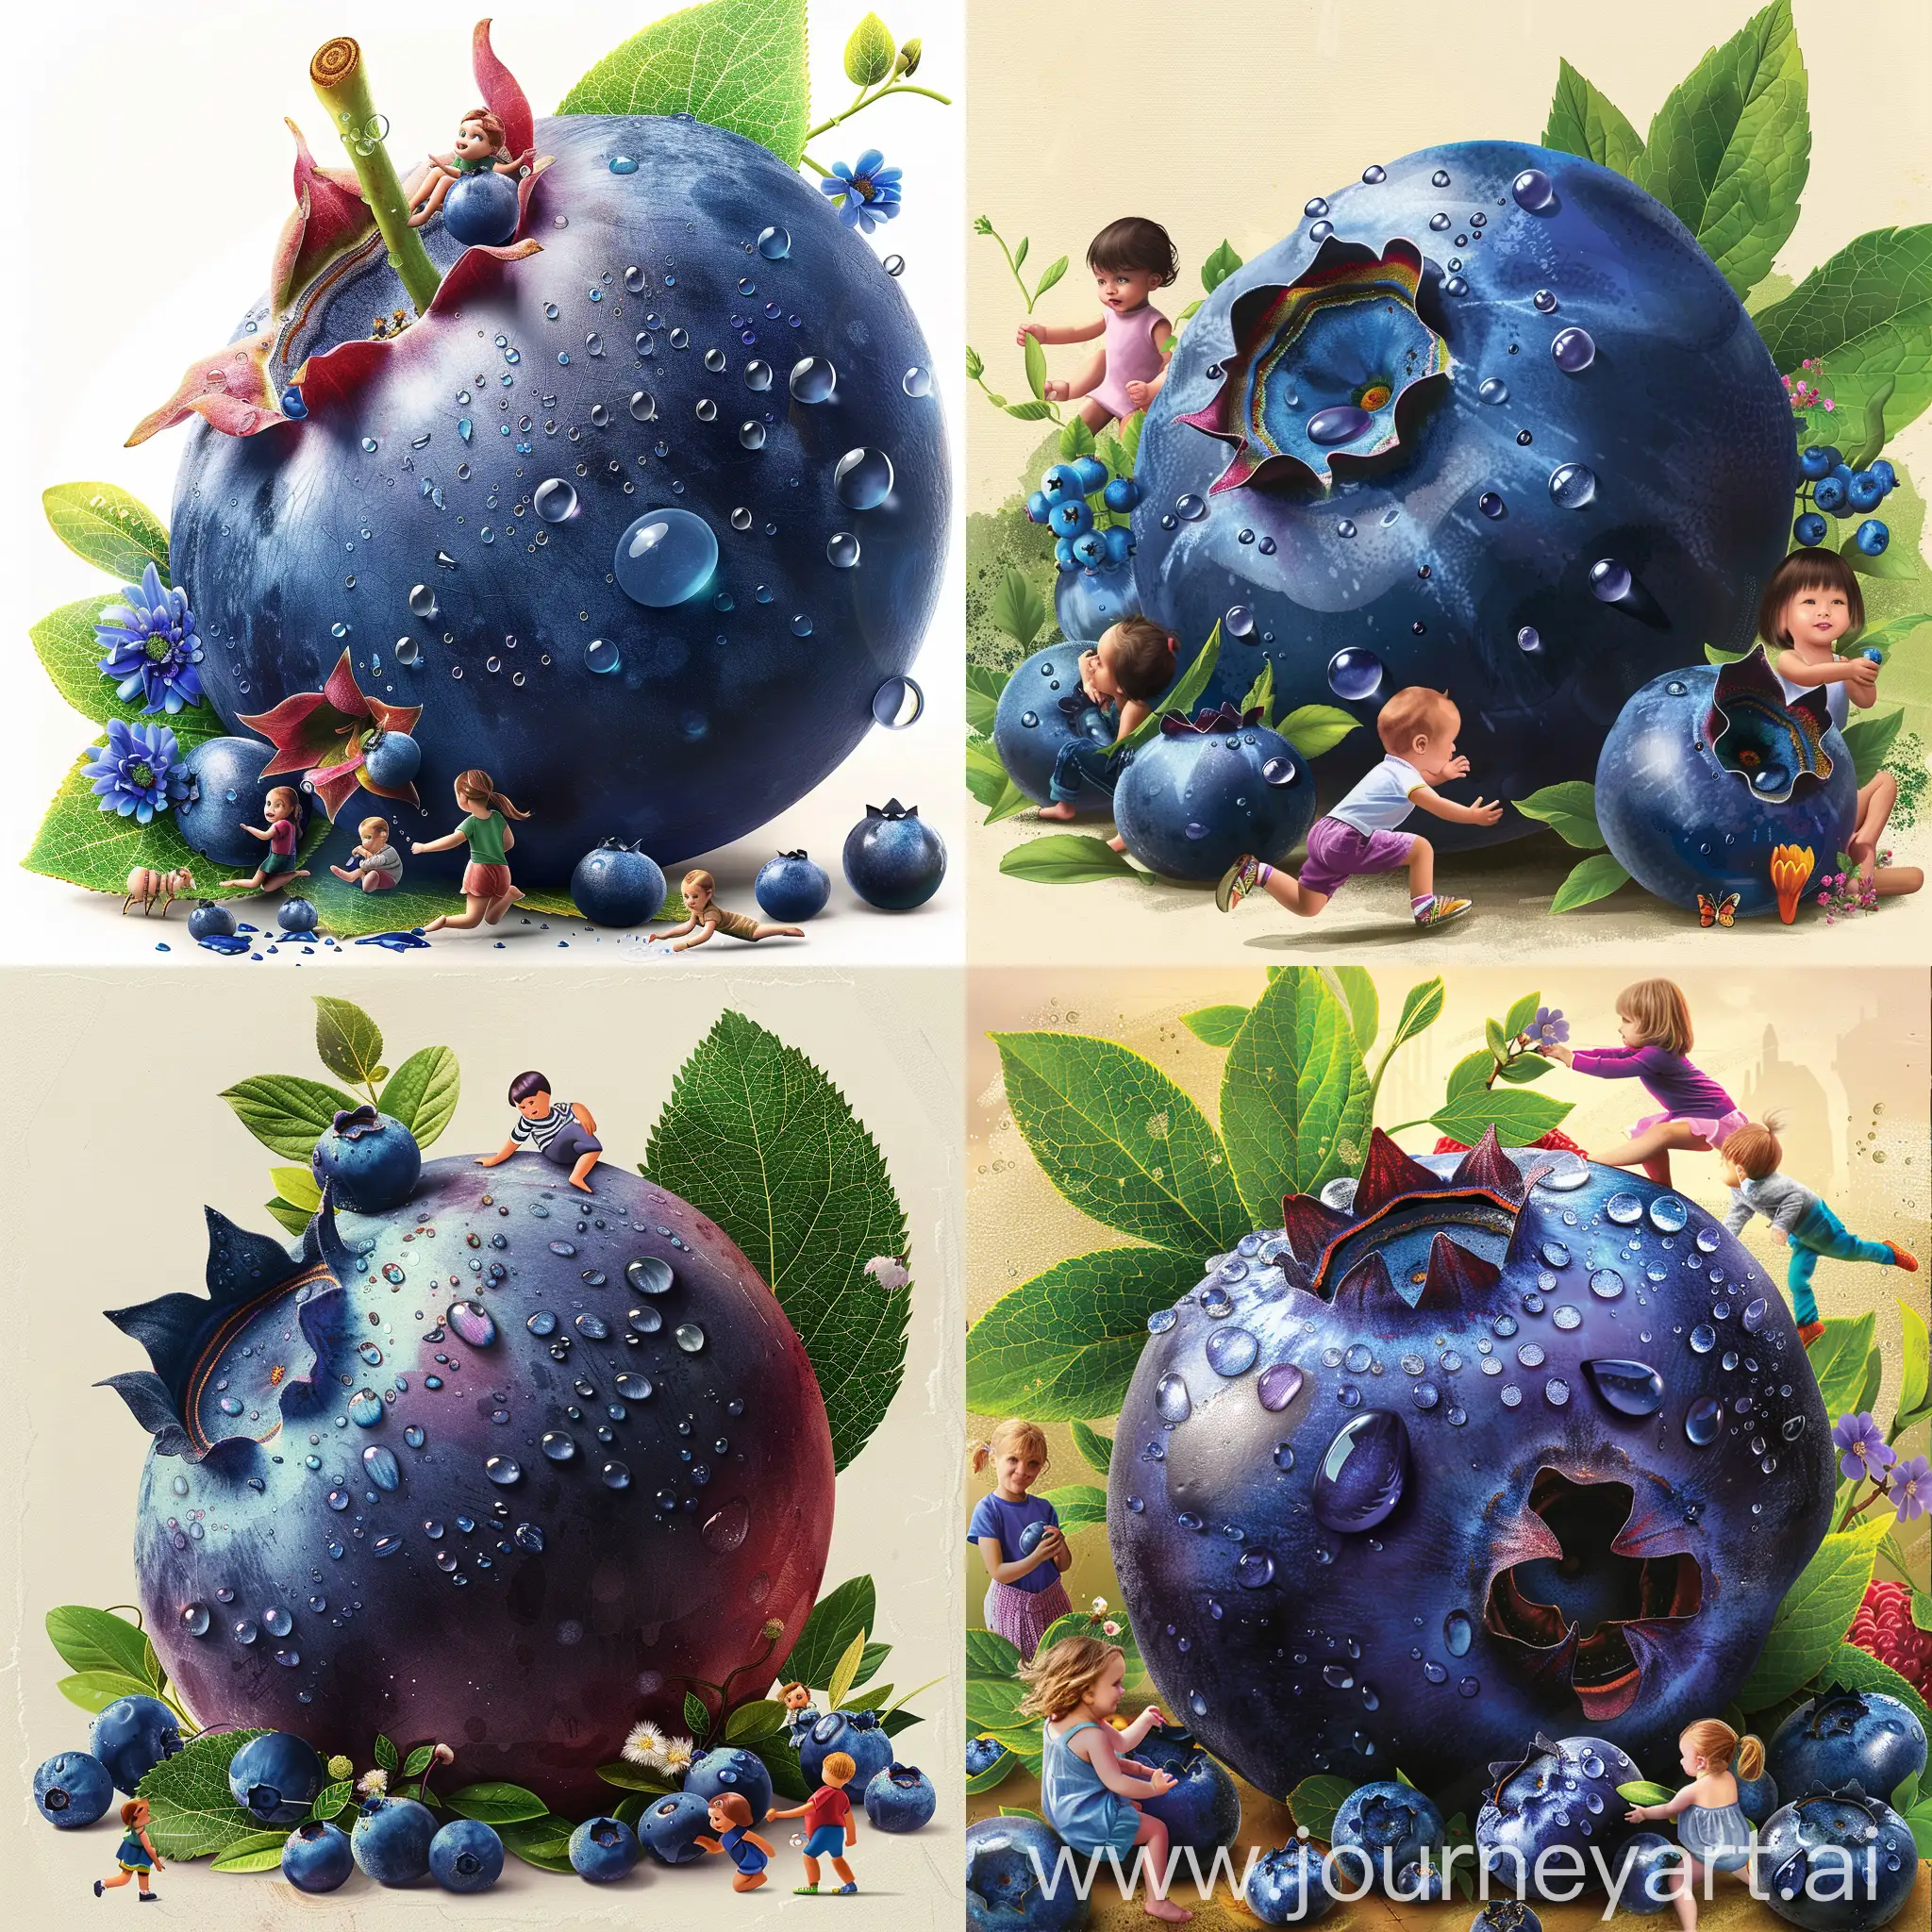 Vibrant-Children-Playing-Around-Oversized-Blueberry-Fruit